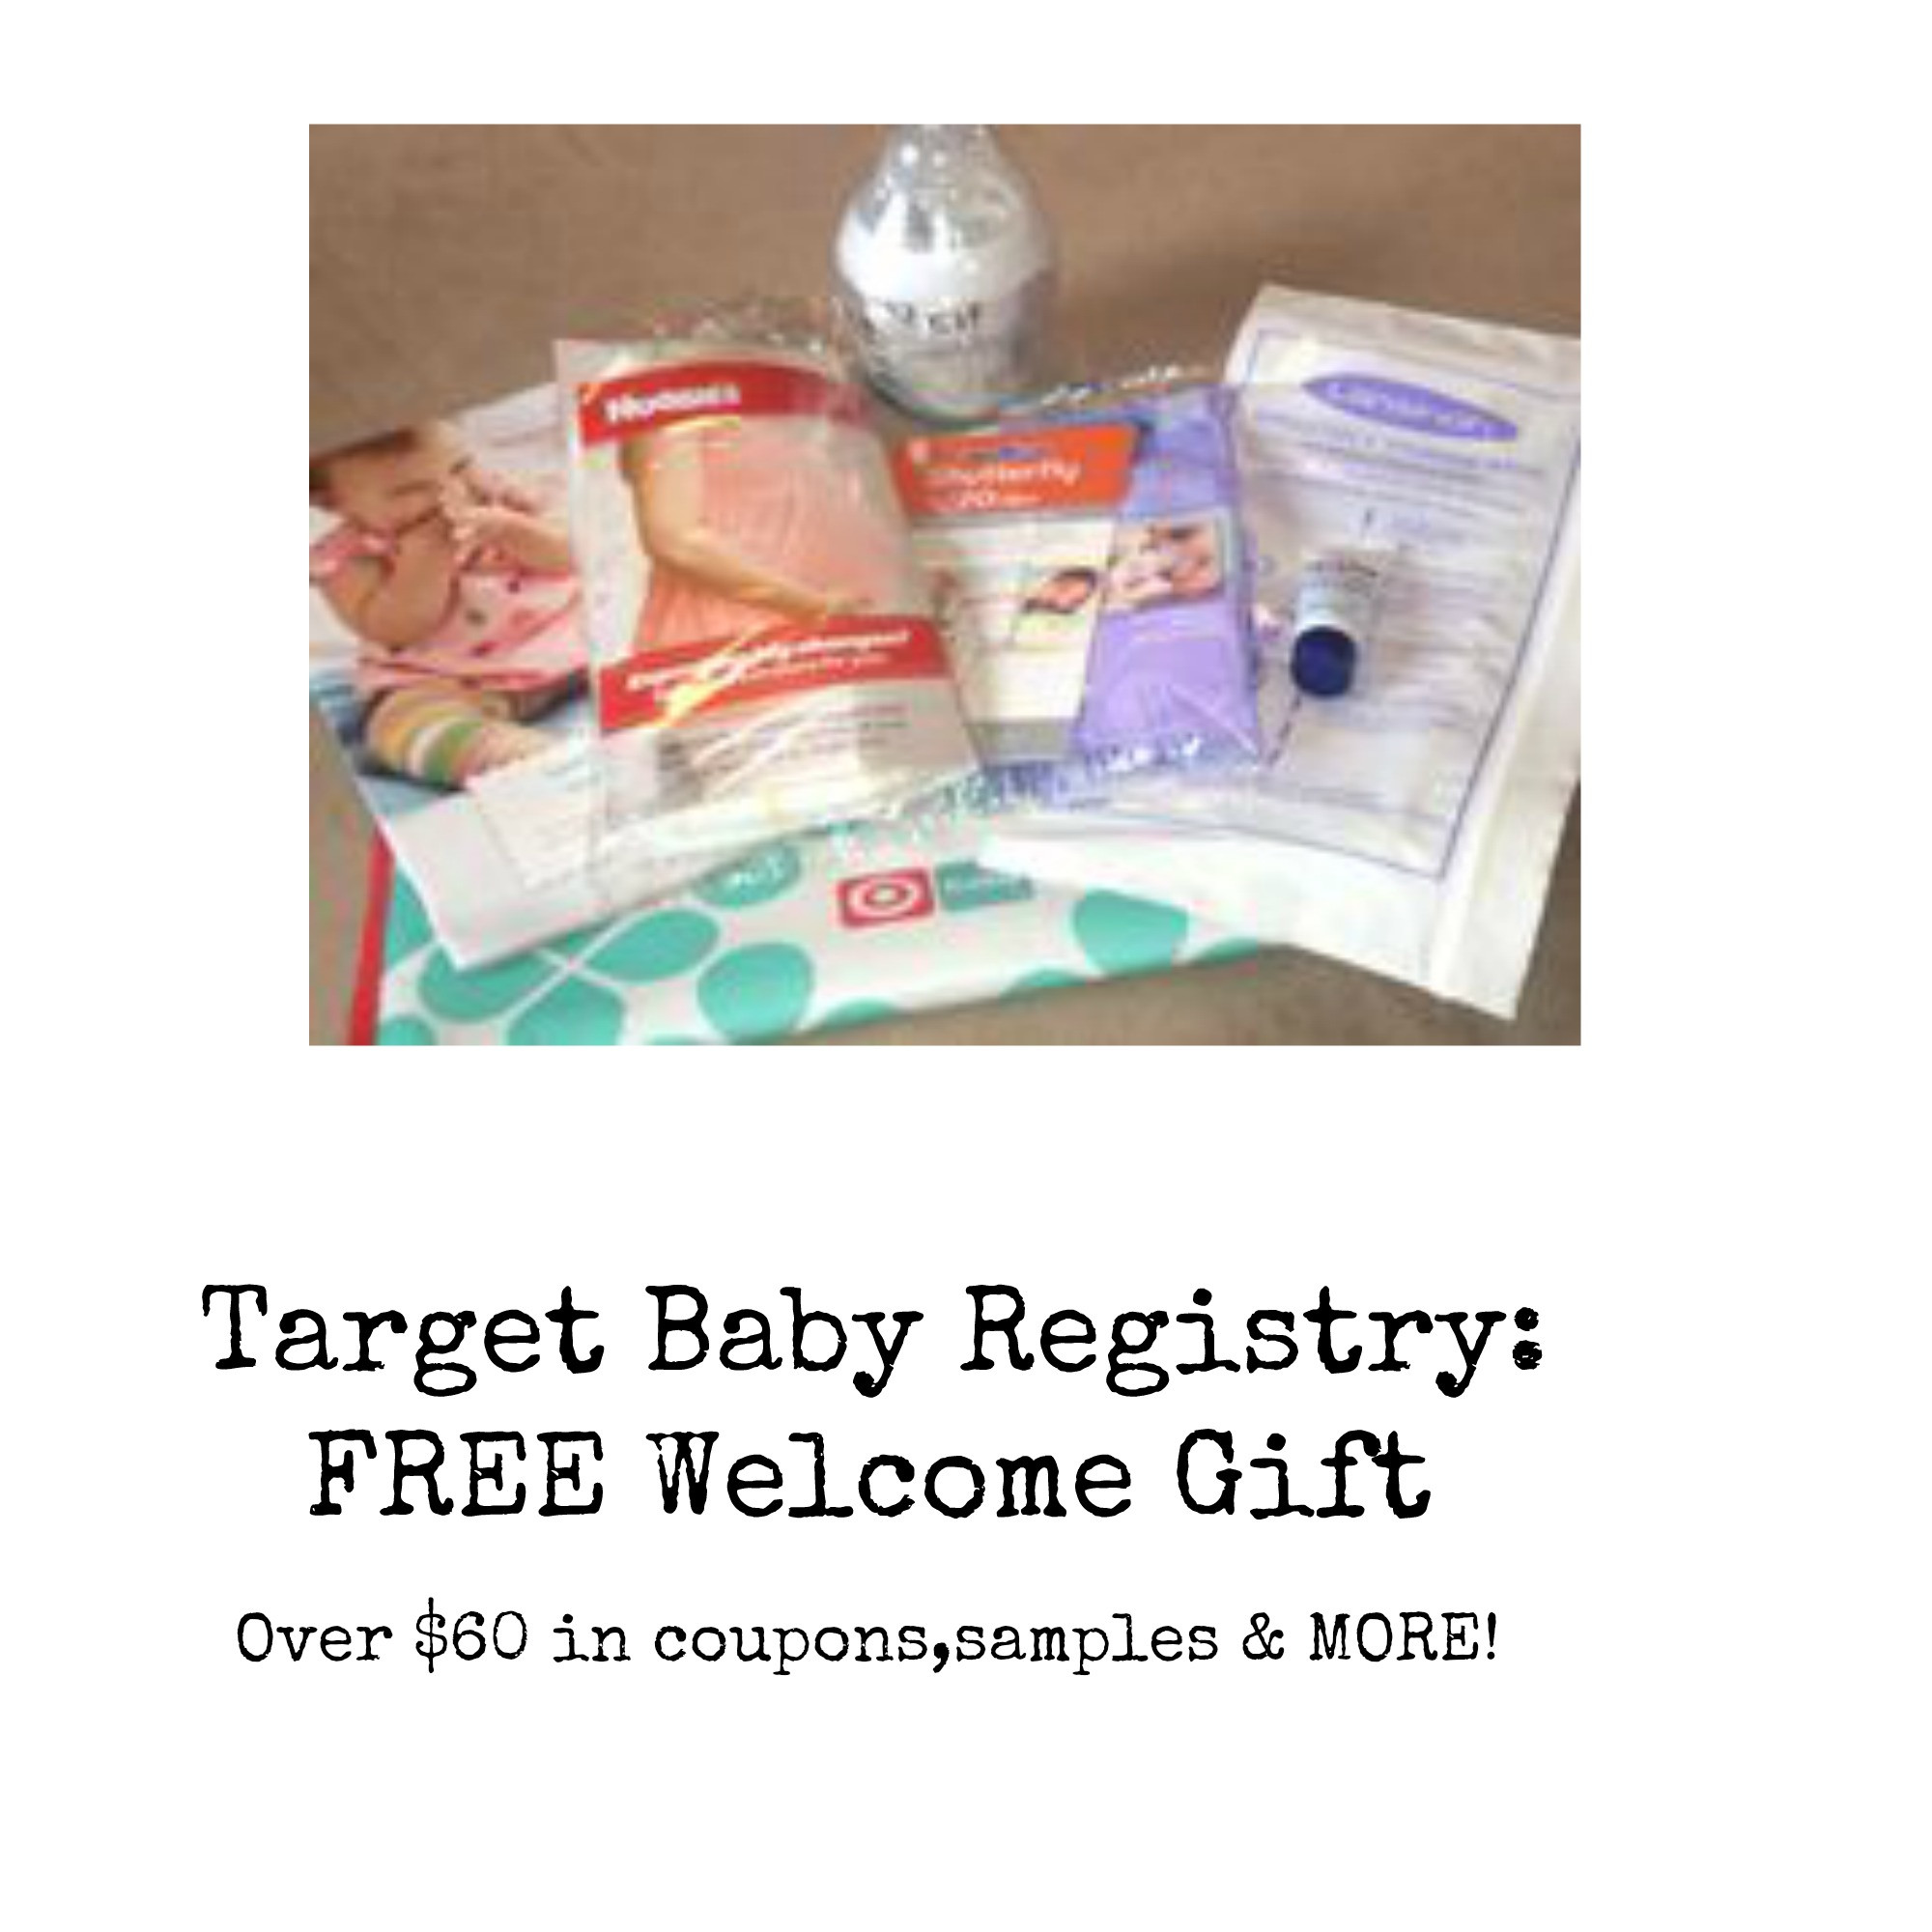 Target Baby Registry Gift
 Tar Baby Registry FREE Wel e Gift Over $60 Value